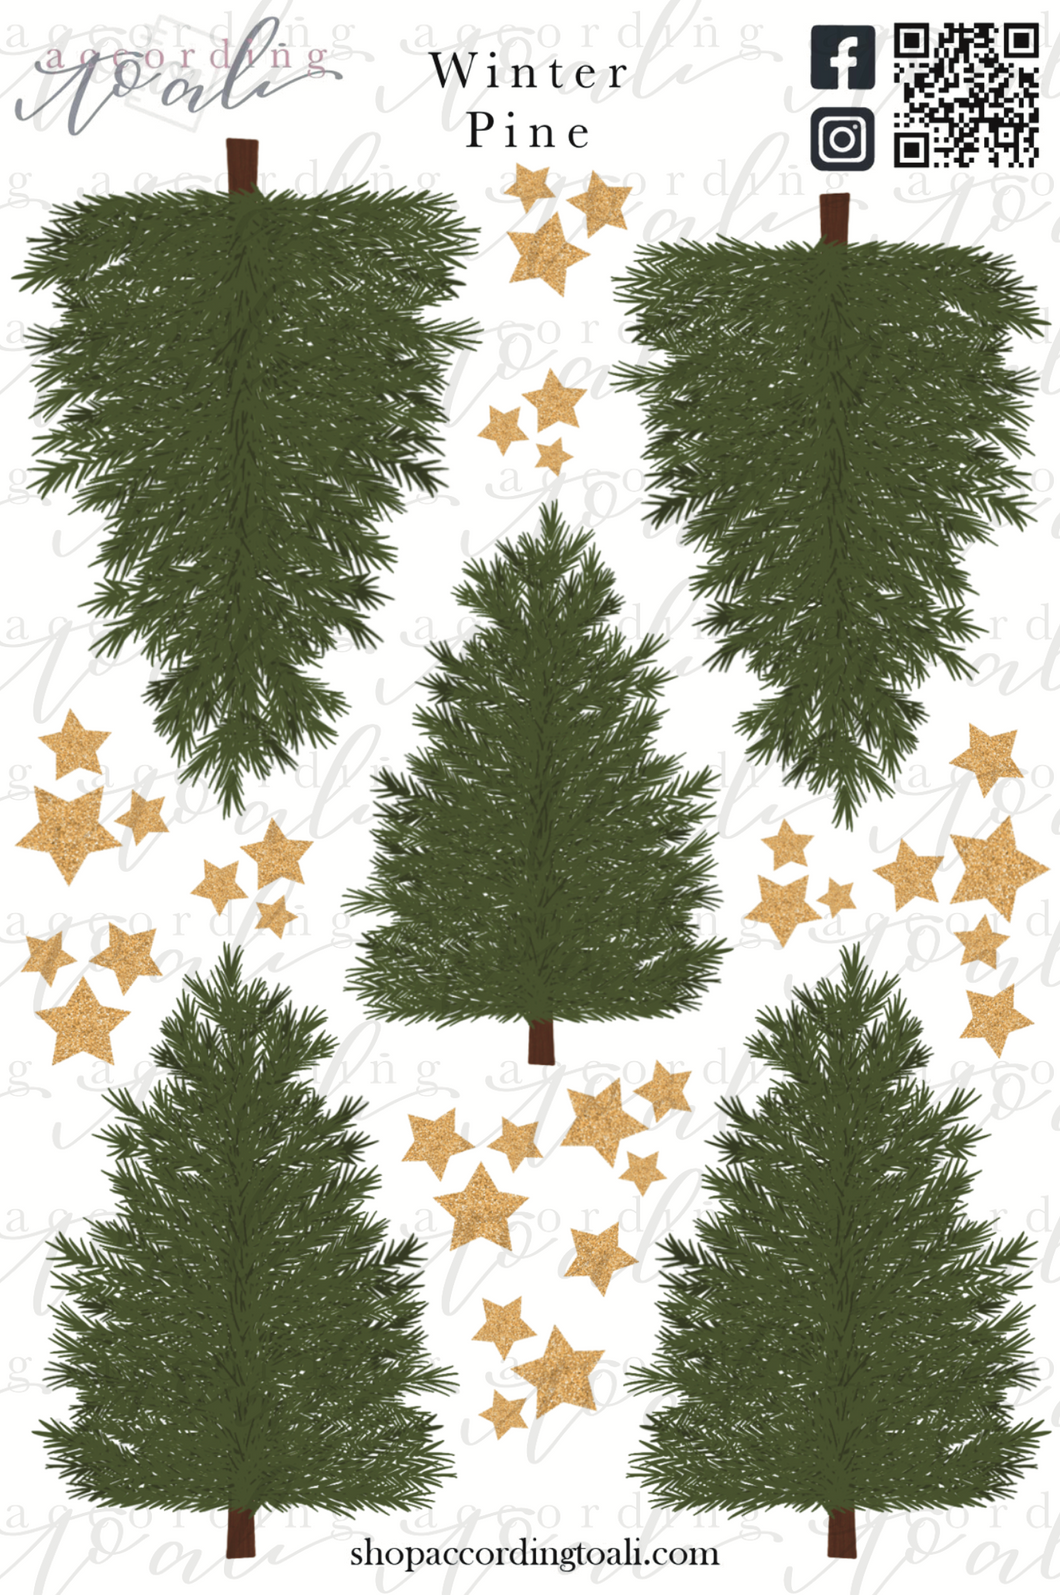 Winter Pine Sticker Sheet